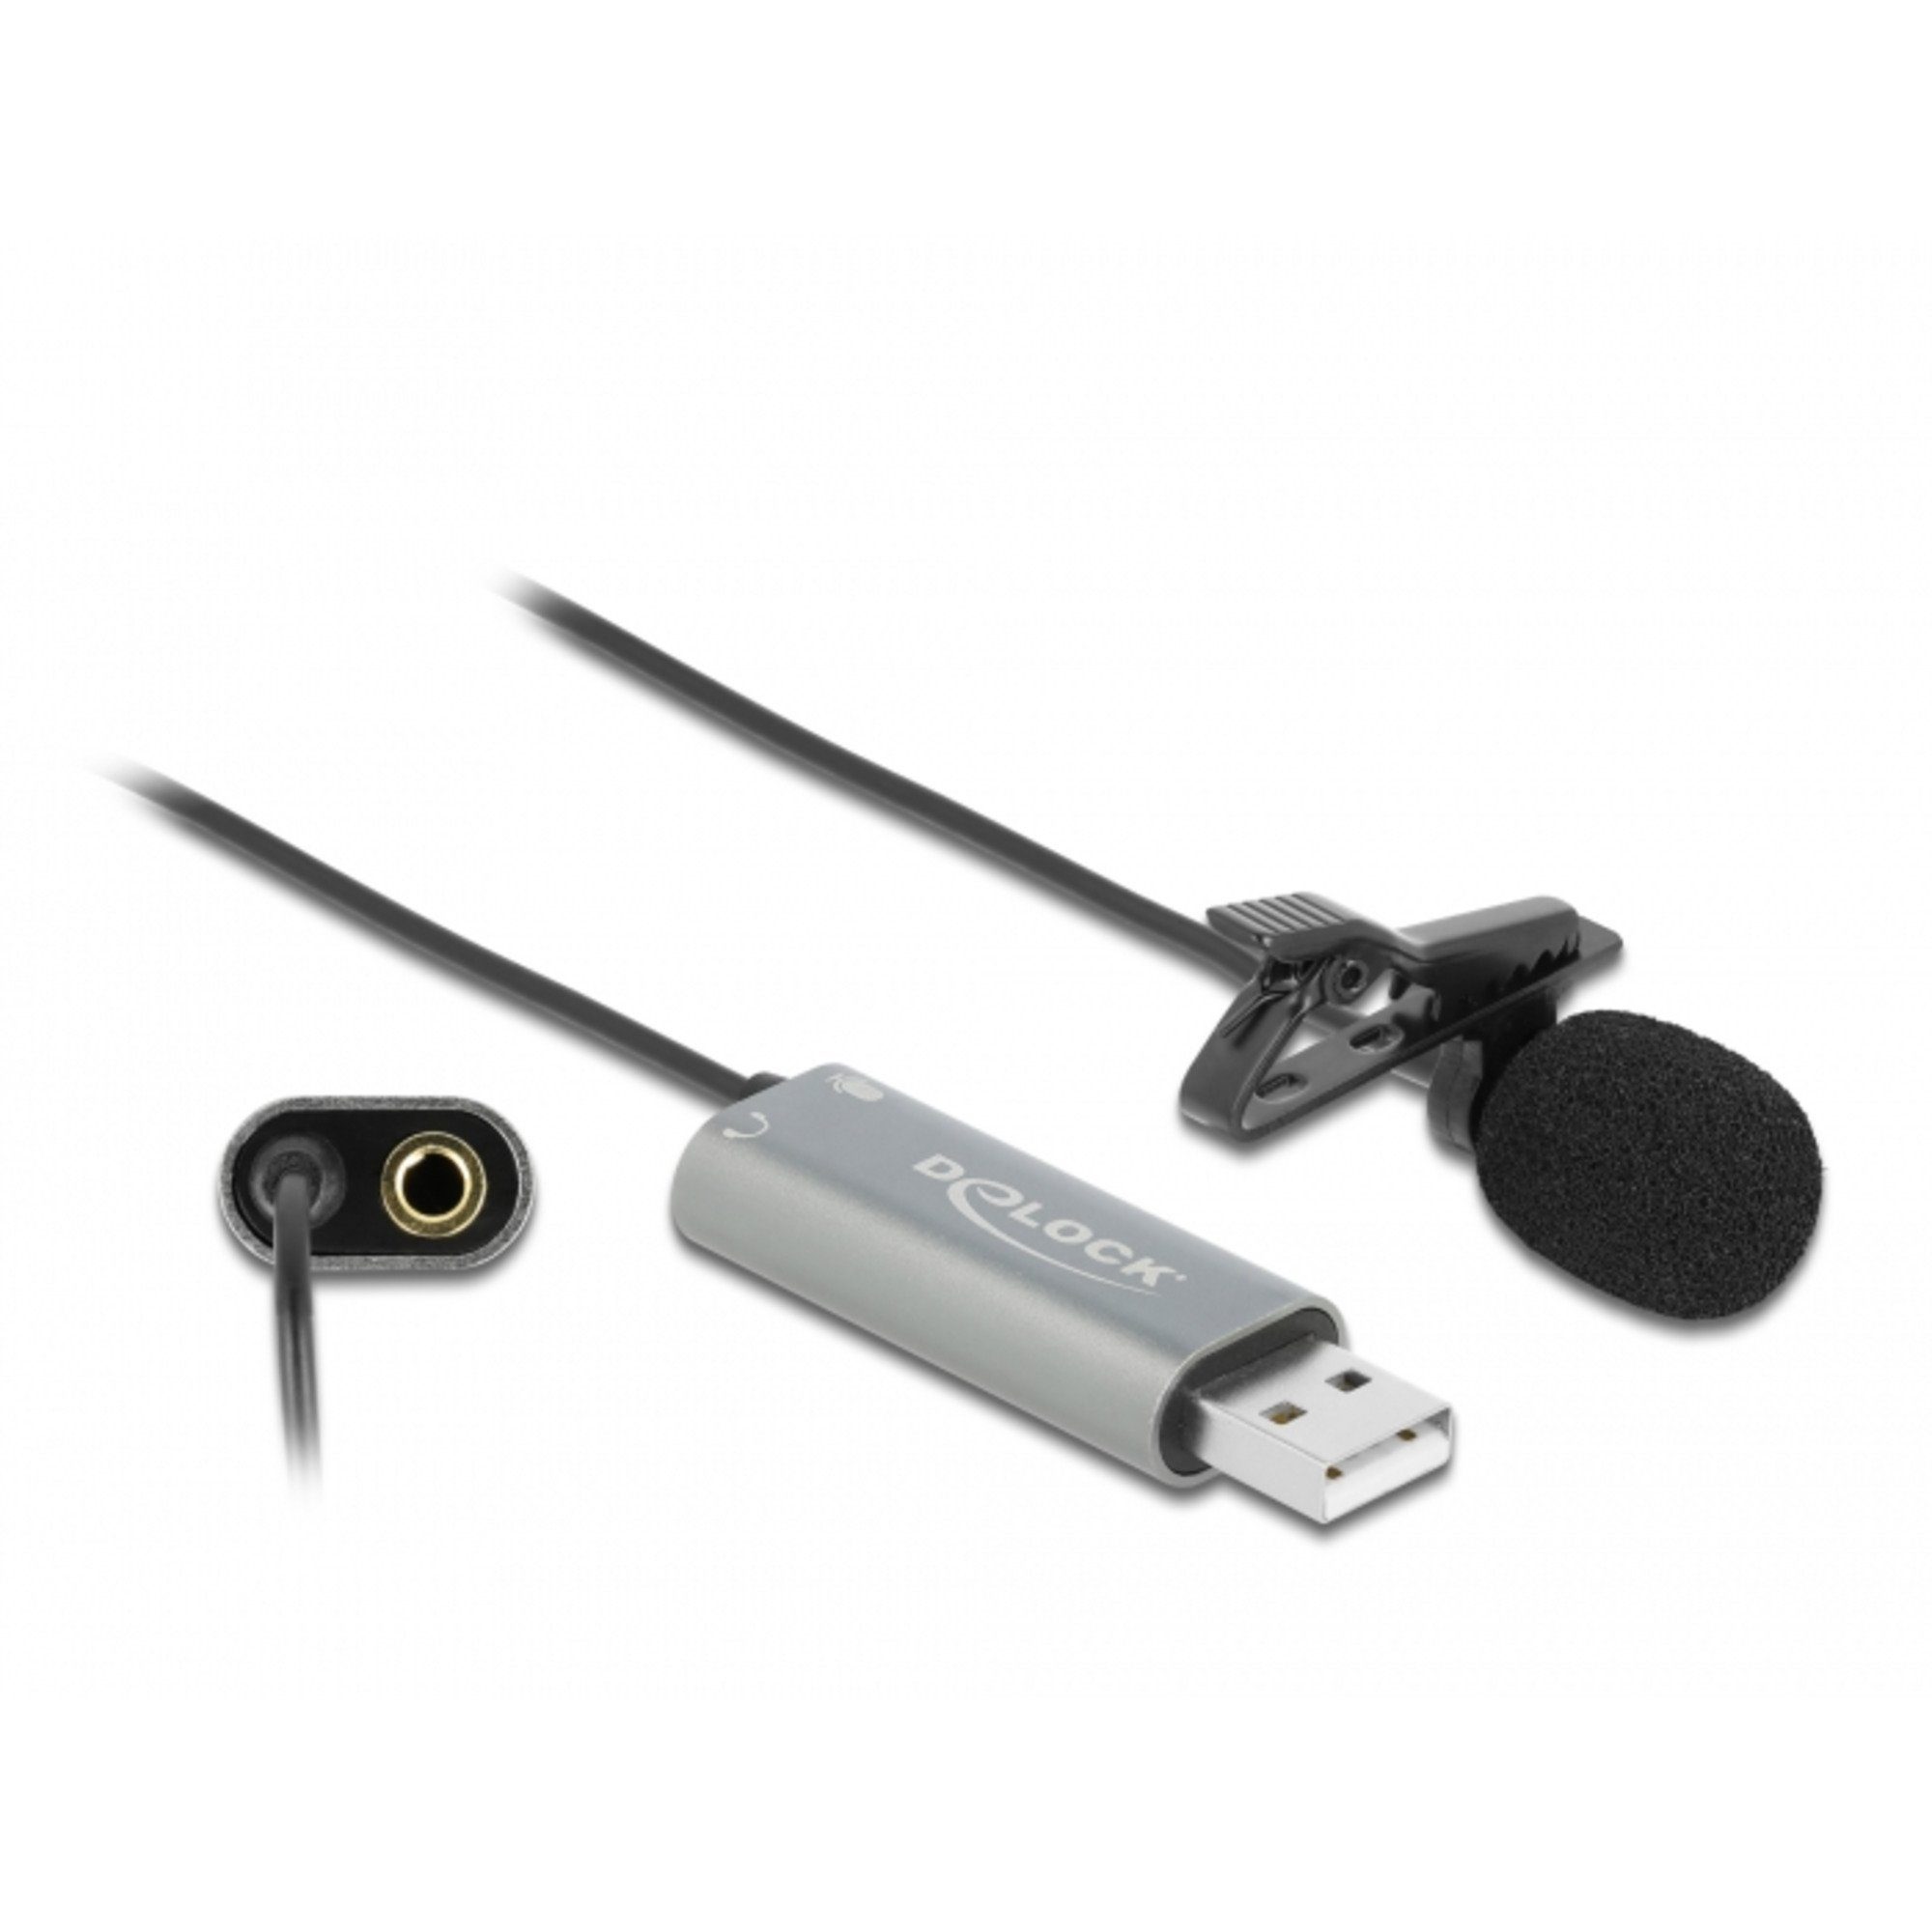 Delock DeLOCK USB (Klinke) Gaming-Headset Mikrofon, Krawatten